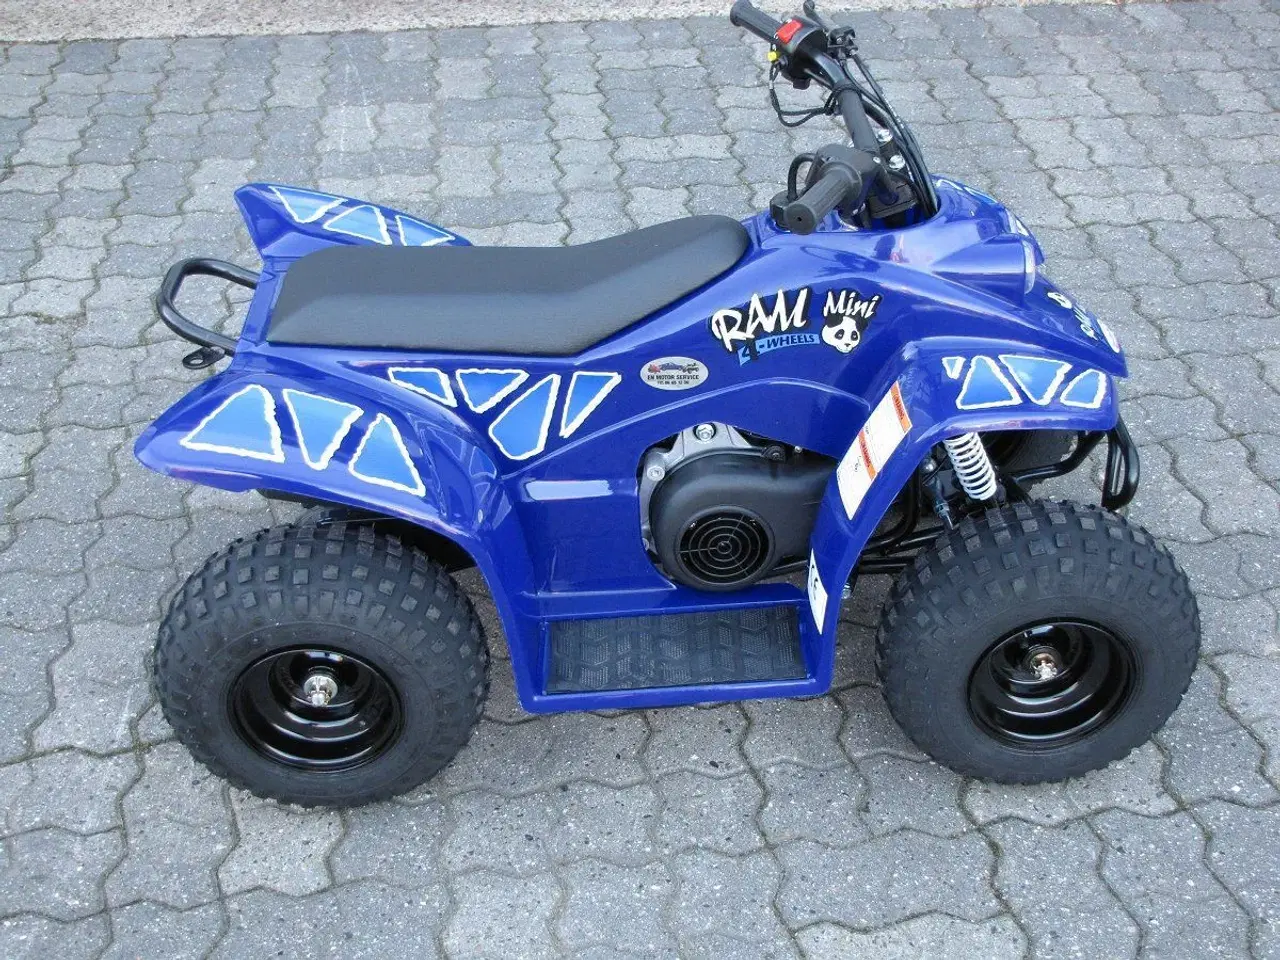 Billede 9 - SMC Ram mini 50, børne ATV